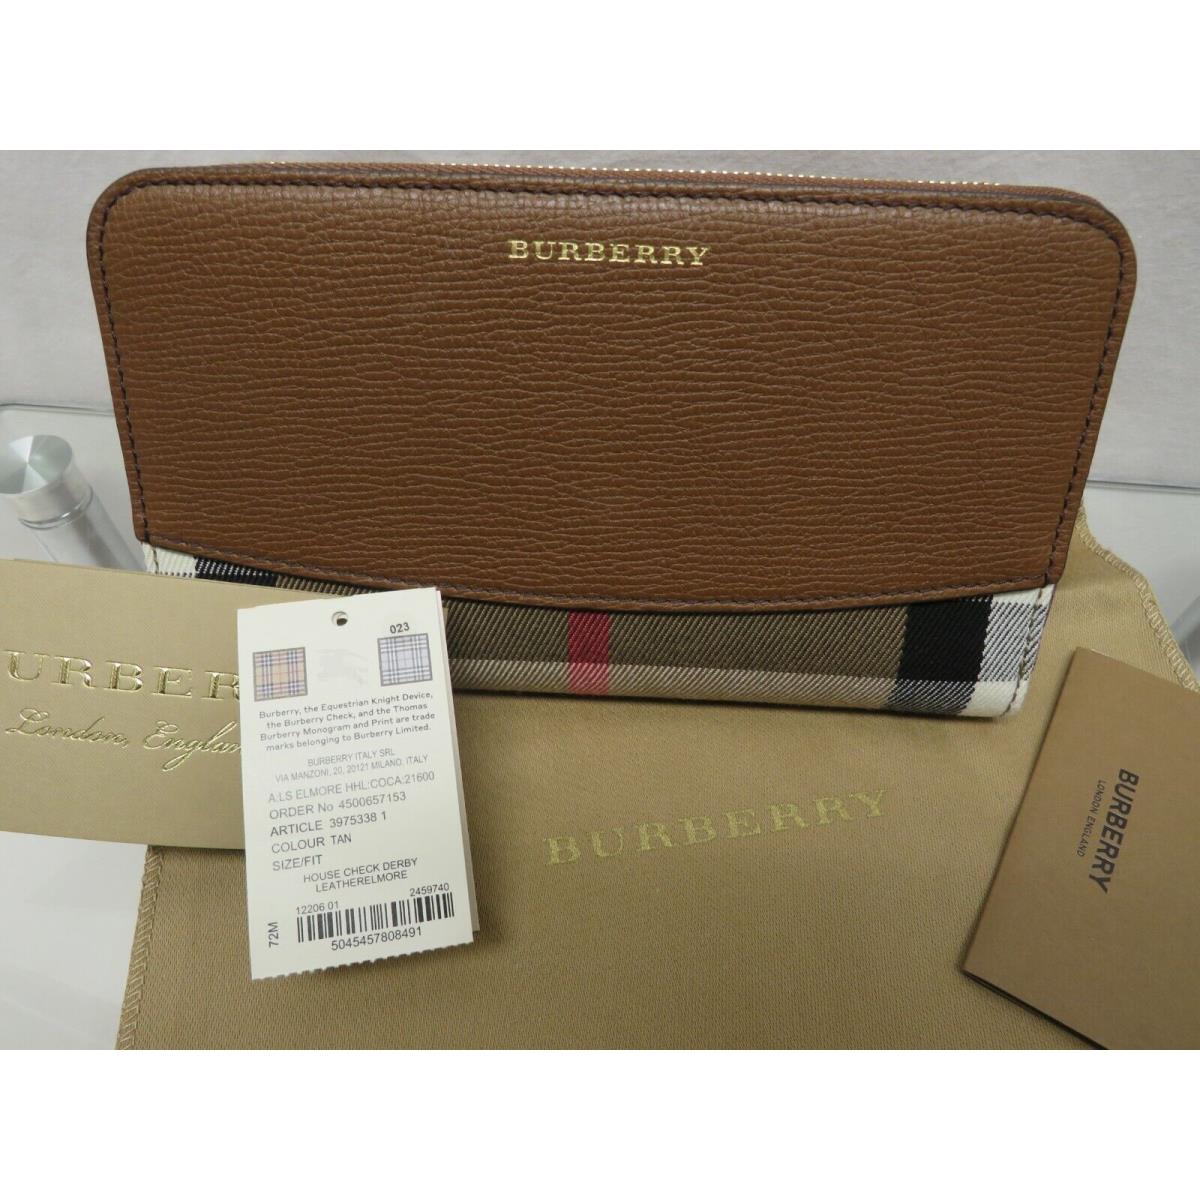 Burberry wallet  - Brown 9